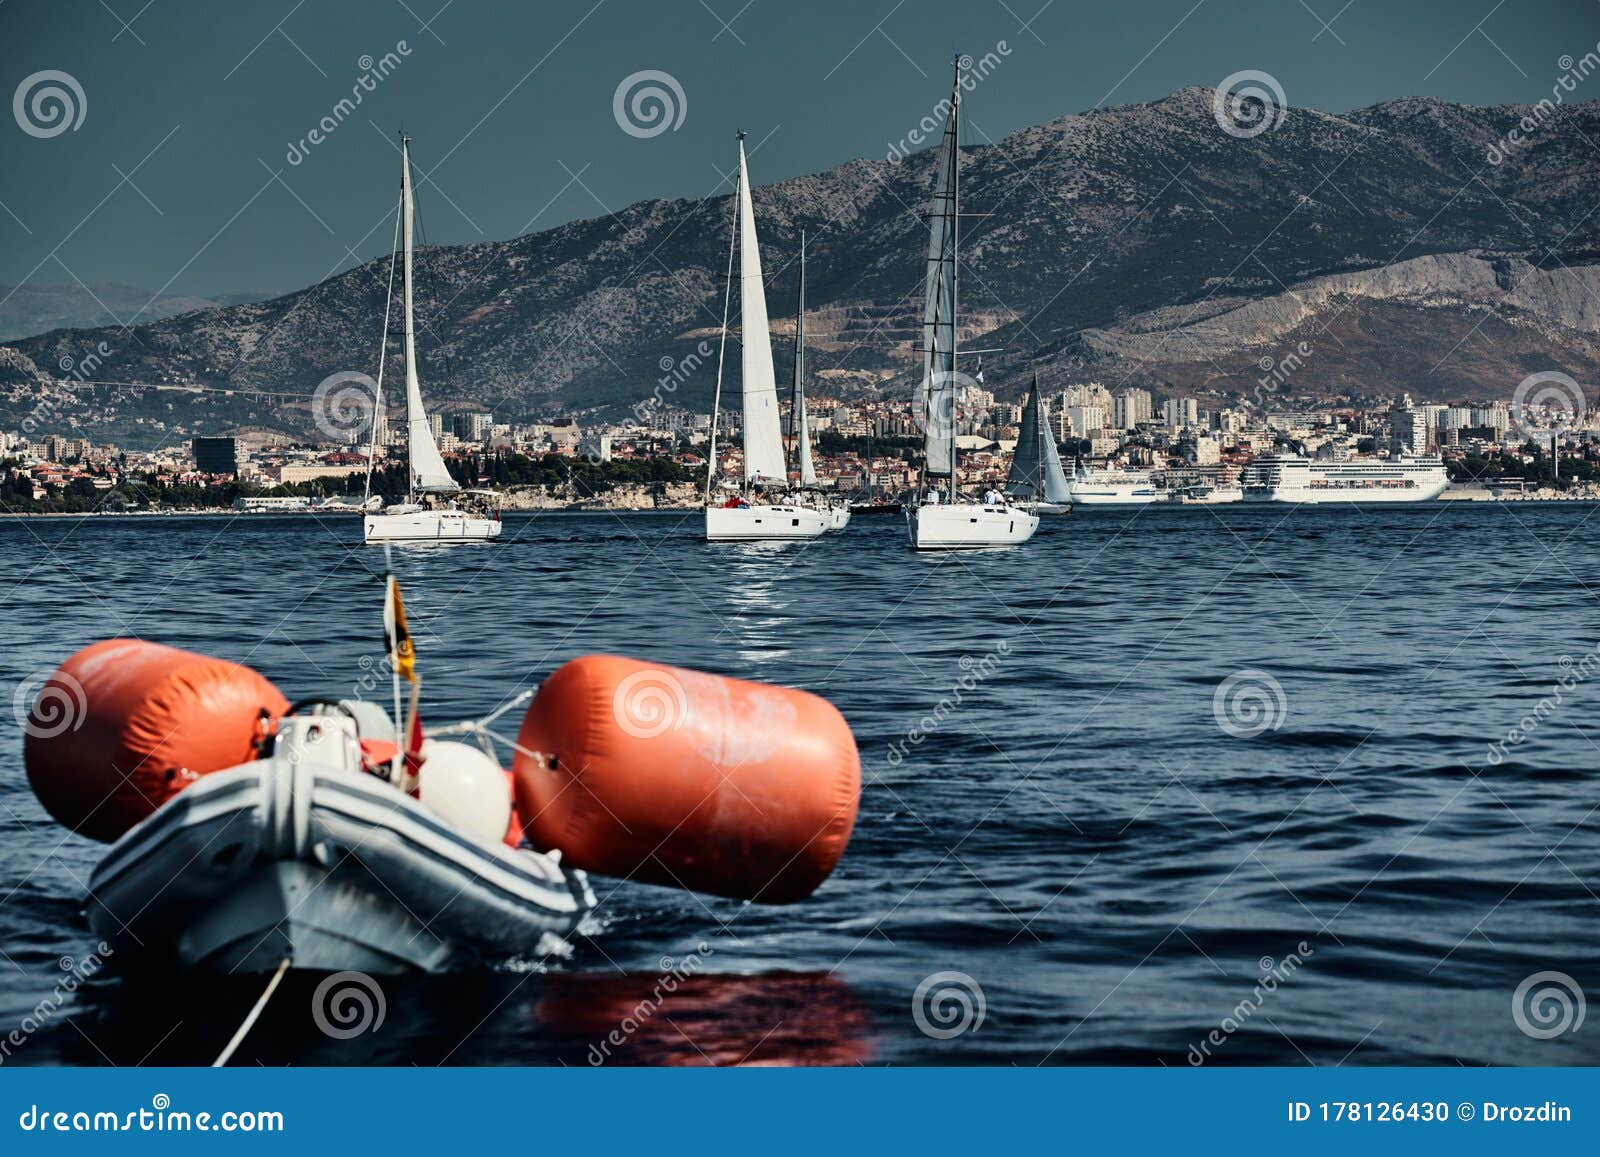 https://thumbs.dreamstime.com/z/rubber-boat-organizers-regatta-judge-balloon-orange-color-race-sailboats-intense-competition-island-178126430.jpg